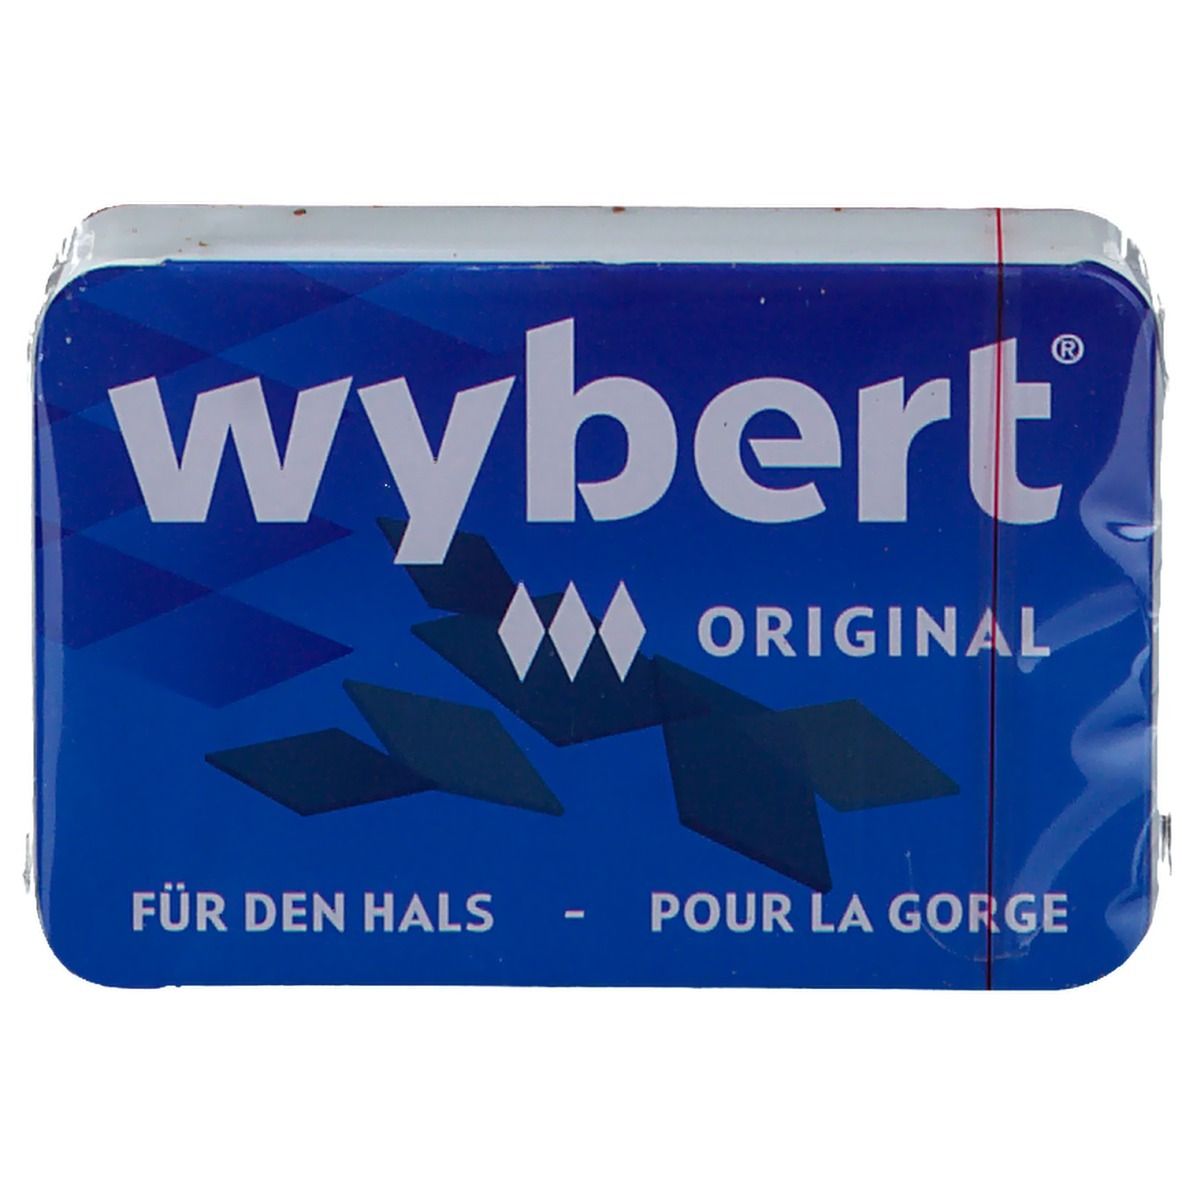 Wybert® Pastillen